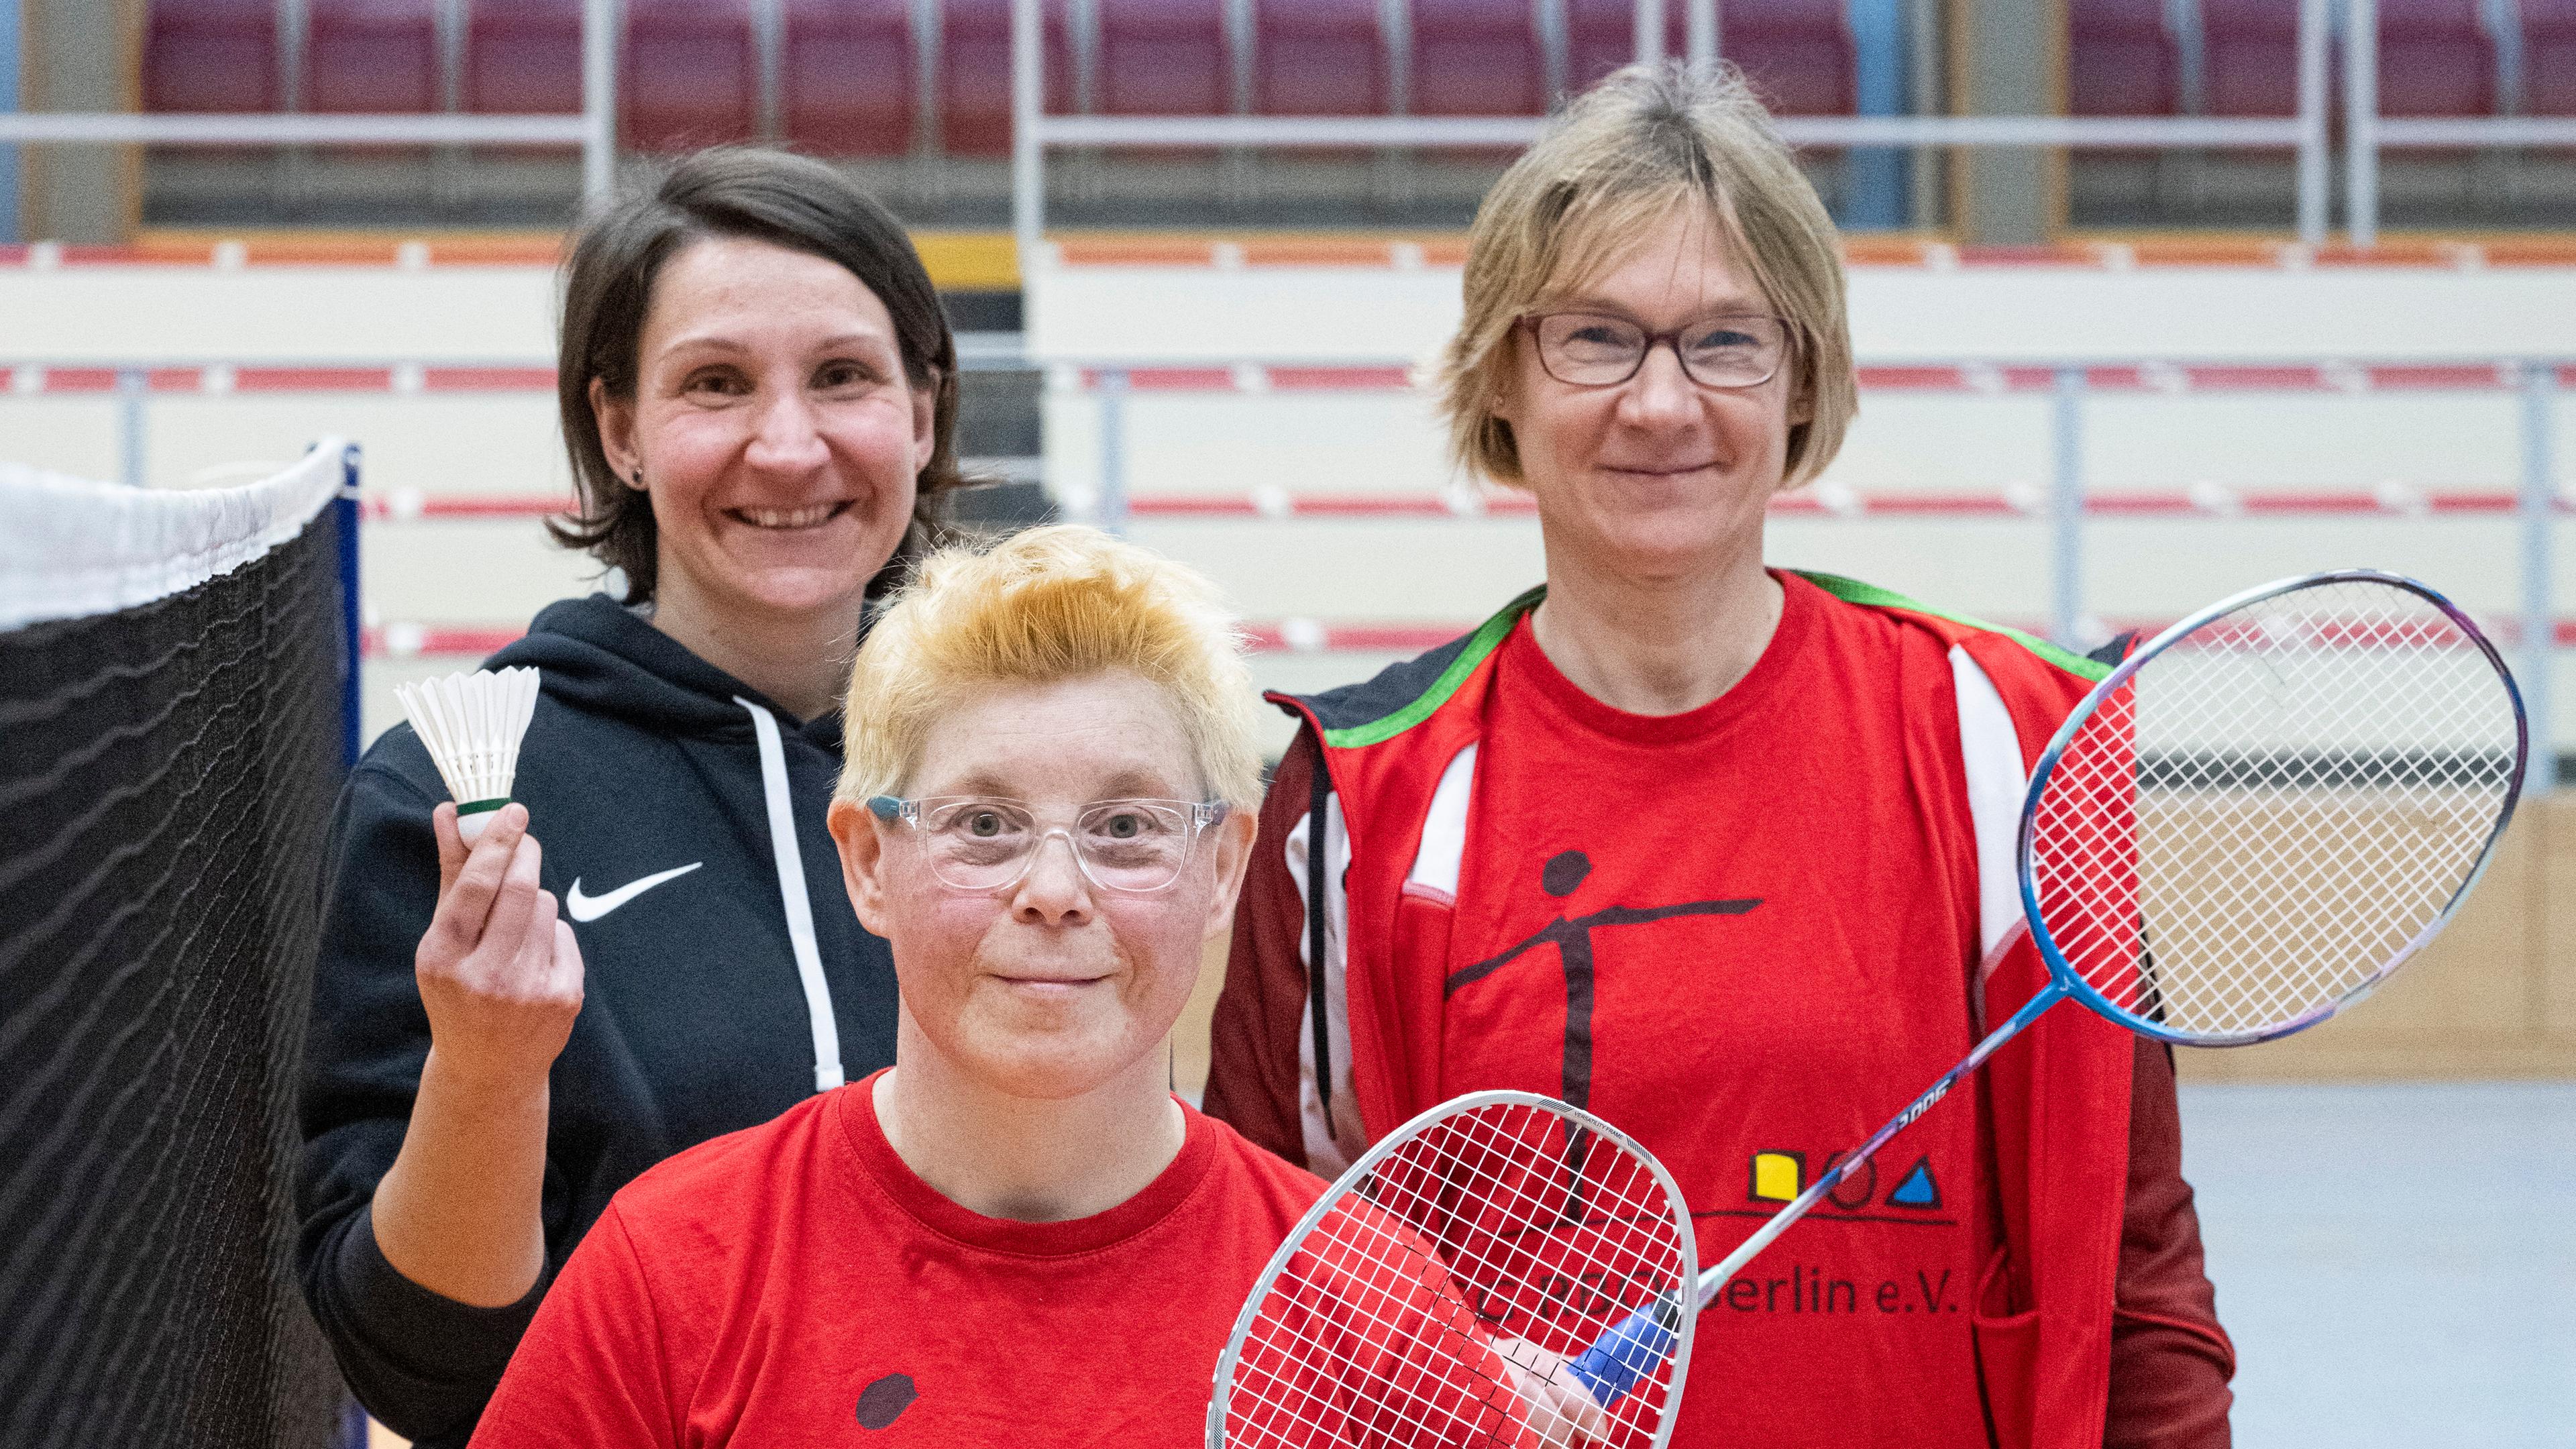 Badmintontraining für die Special Olympics World Games Trainerin Ricarda Koch (l), Athletin Daniela Huhn (M) und ihrer Partnerin Andrea Eichner (r)